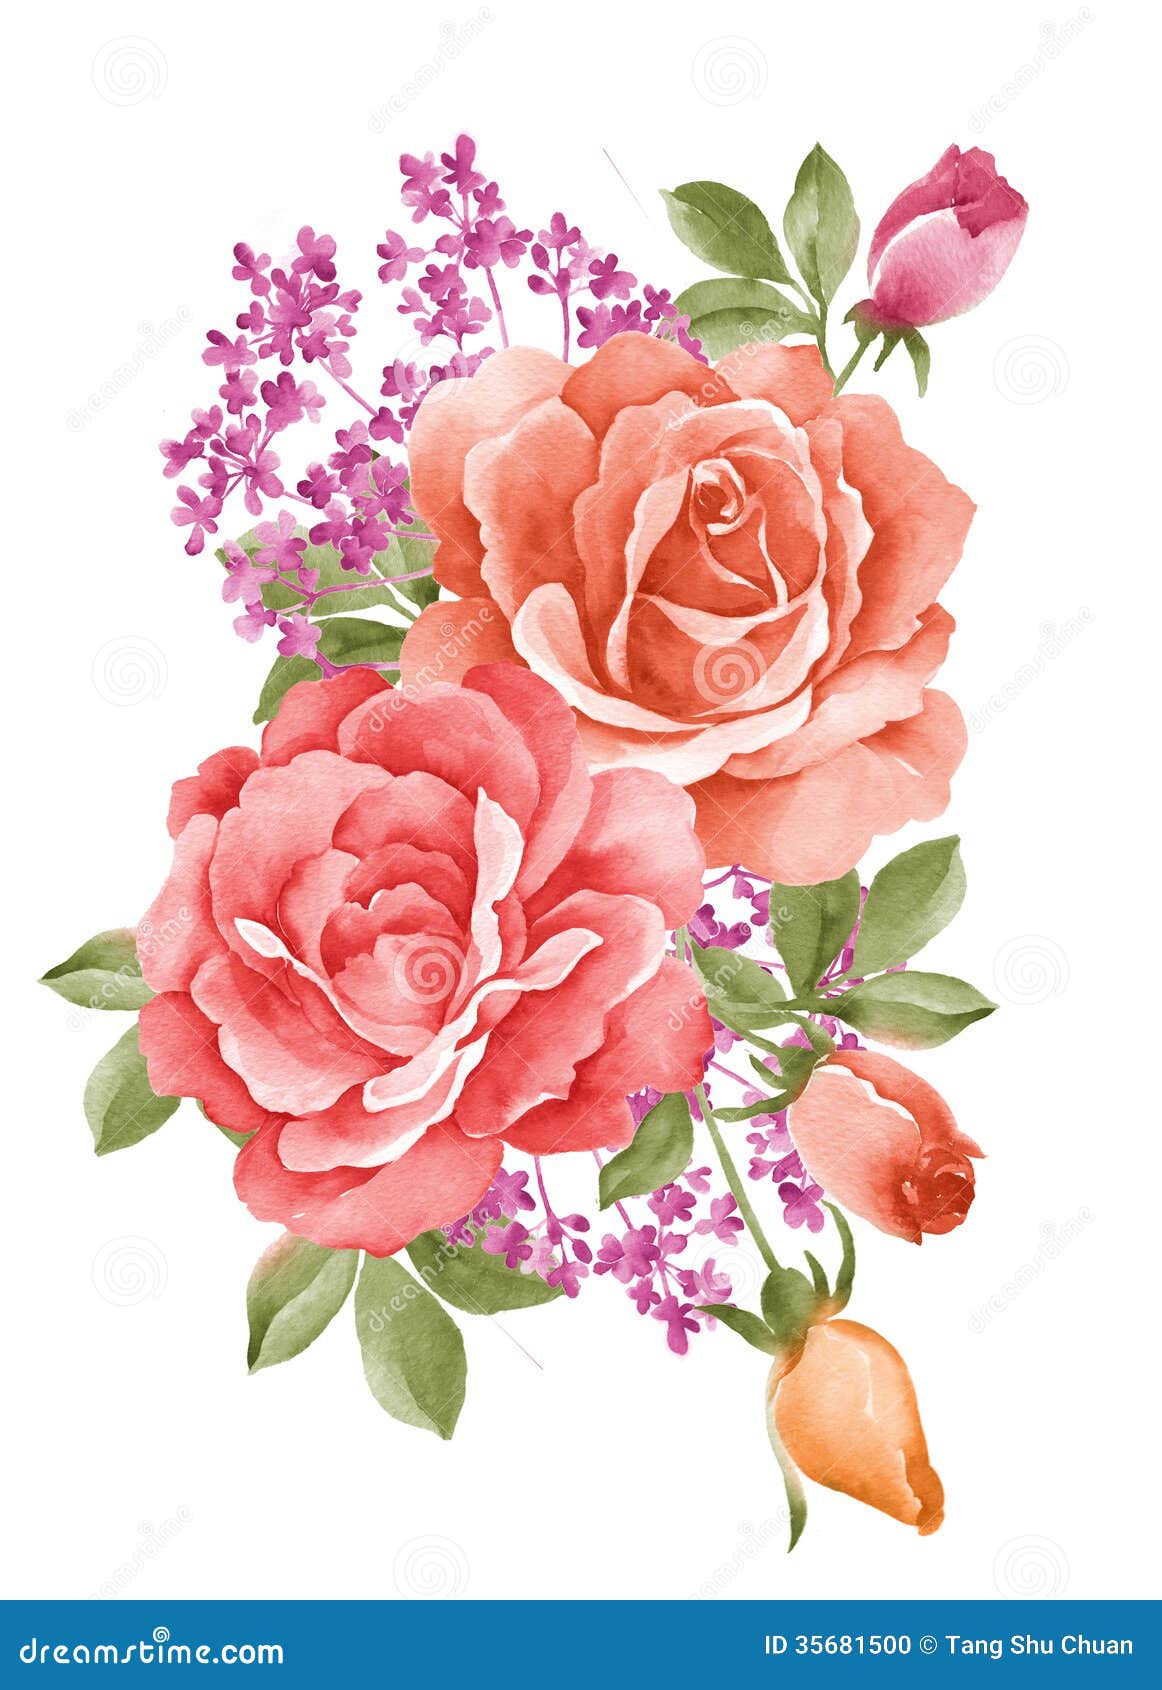 Watercolor Illustration Flower Stock Illustration - Illustration of ...